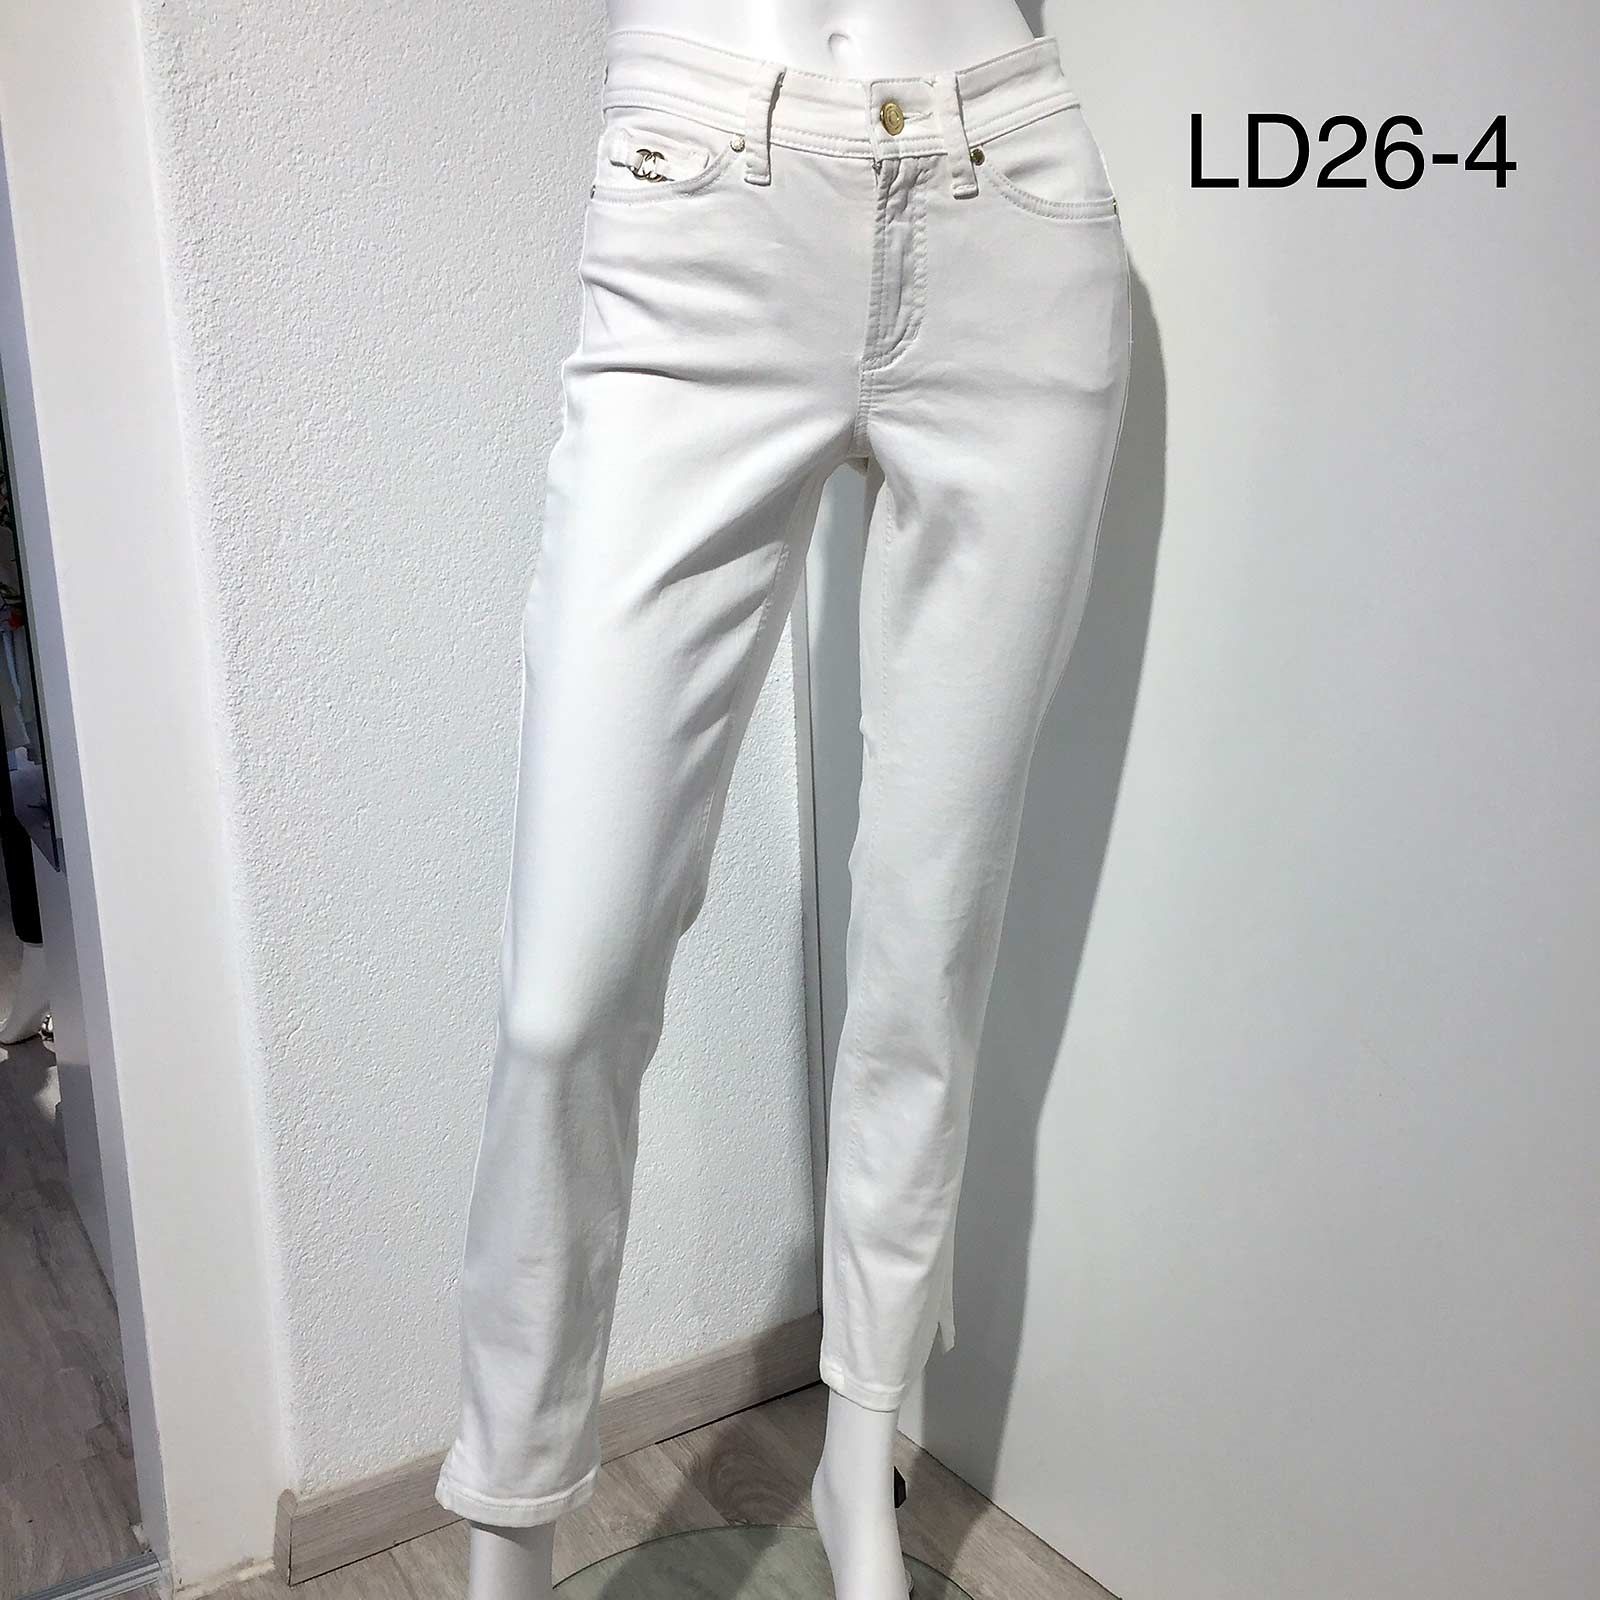 Damen - Look 26-4 | Jeans